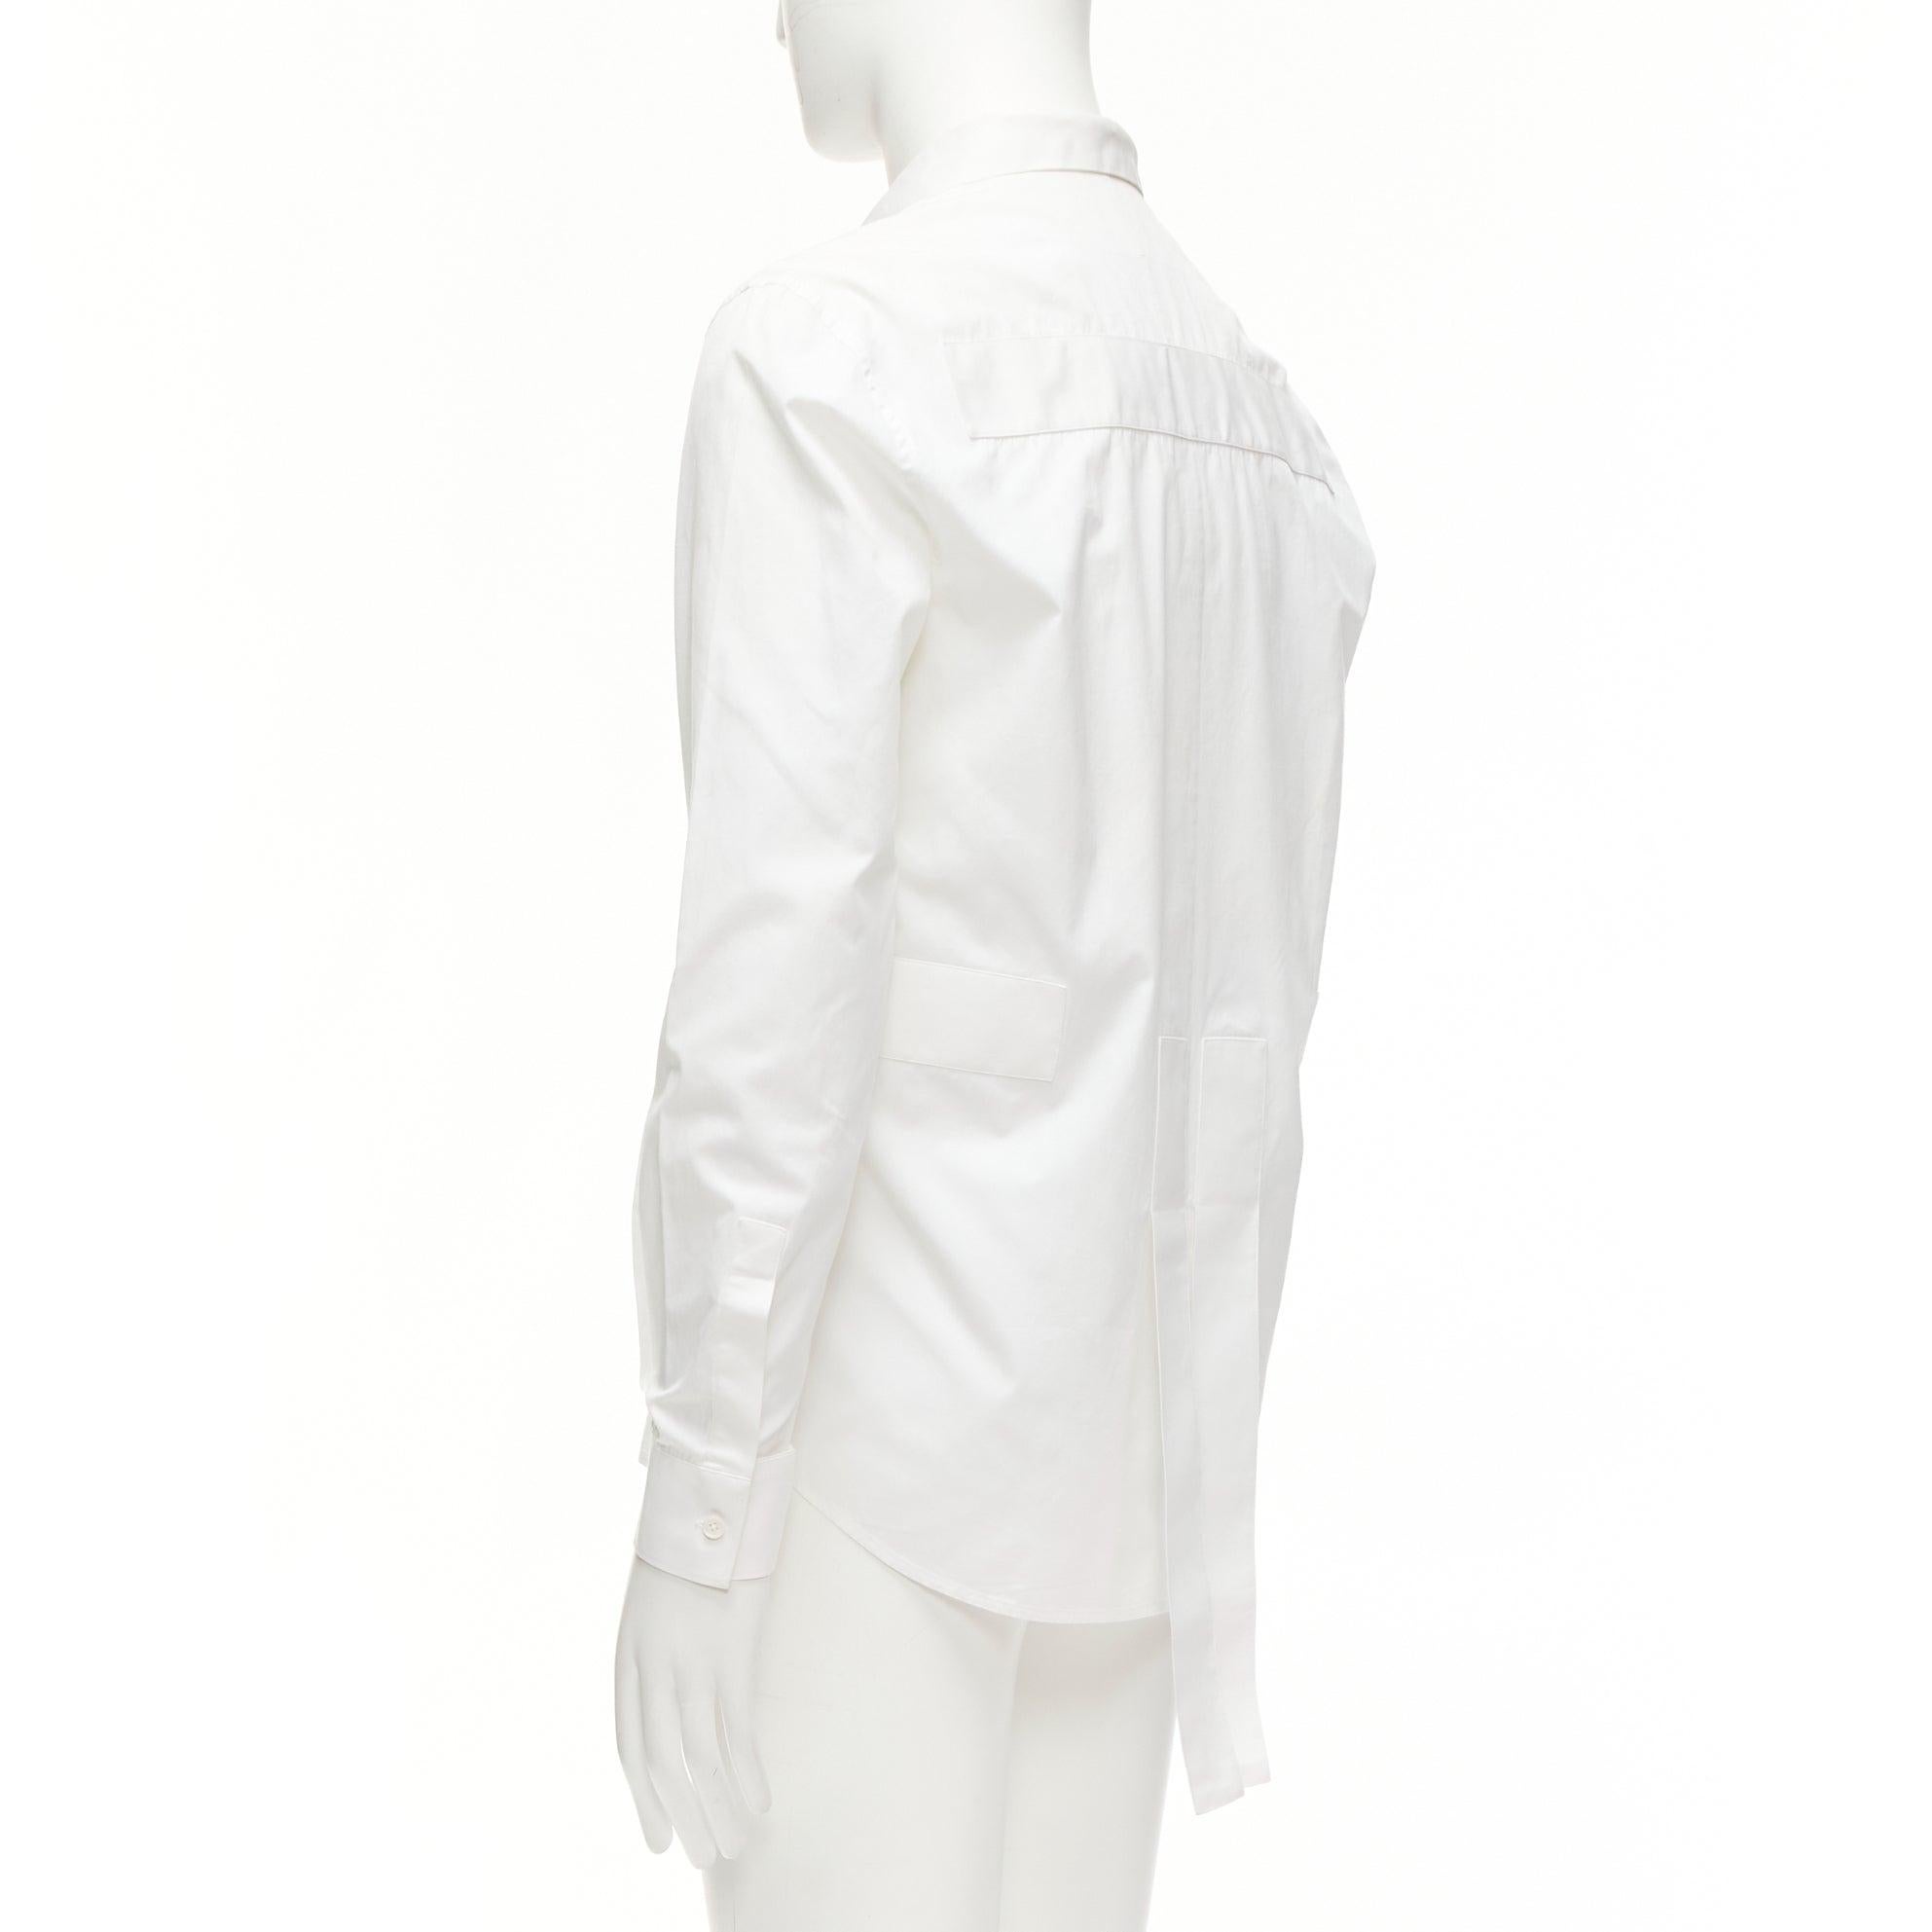 GIVENCHY Riccardo Tisci white cotton band applique shirt EU39 M For Sale 1